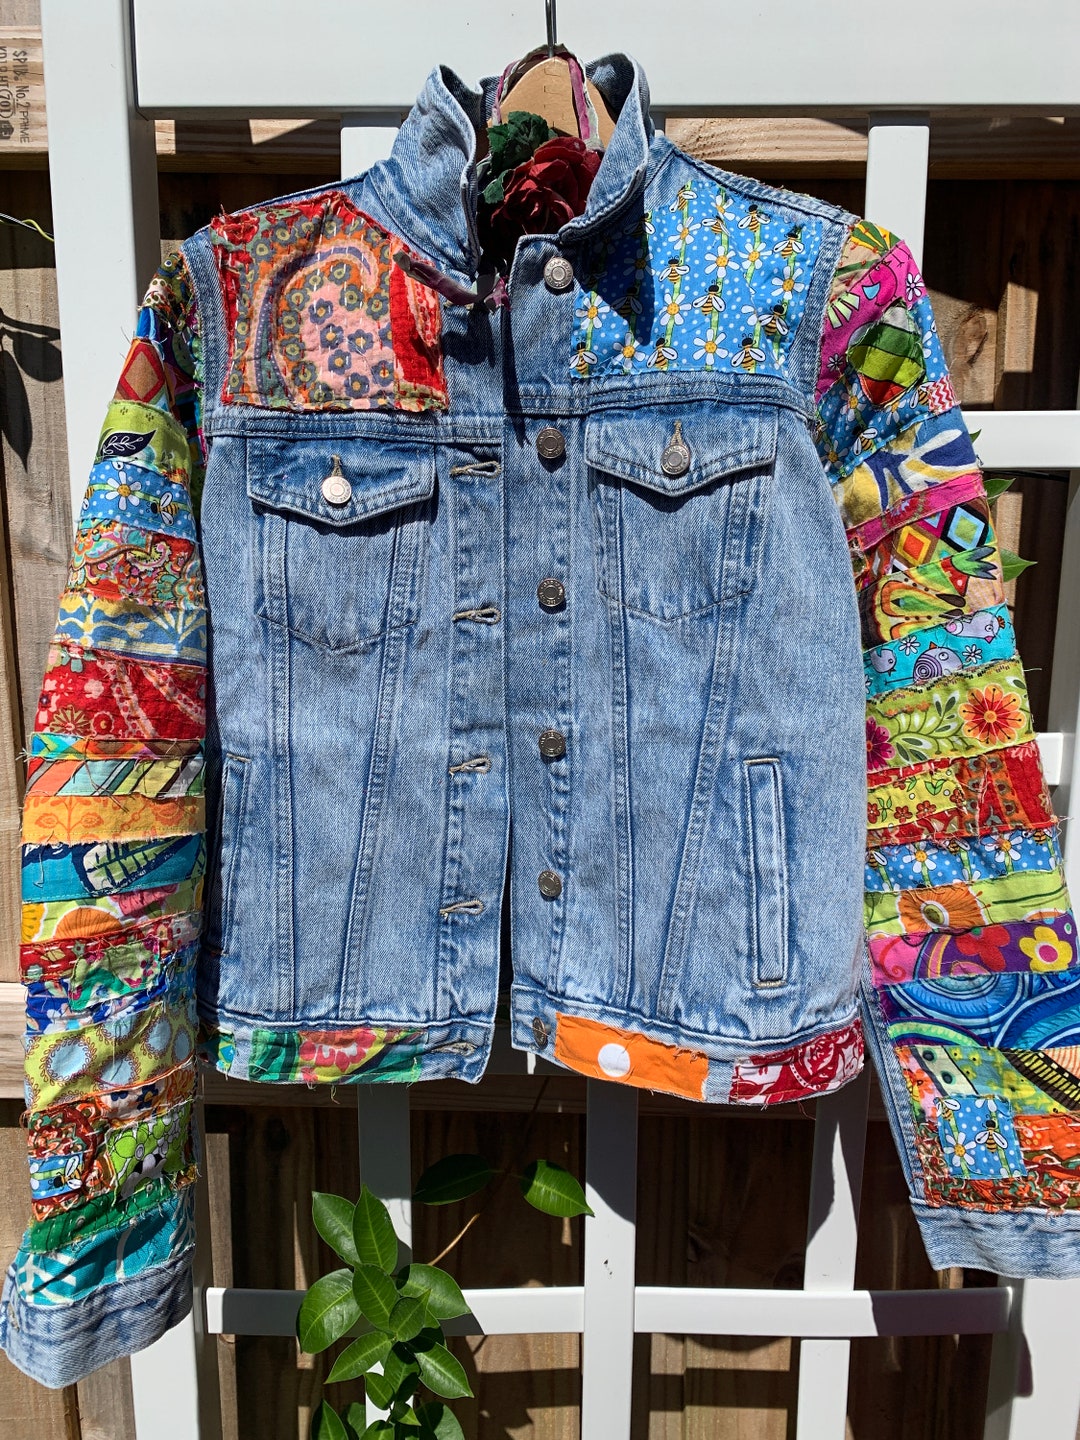 Boho Hippie Kids Upcycled Denim Jacket Size 6/6x